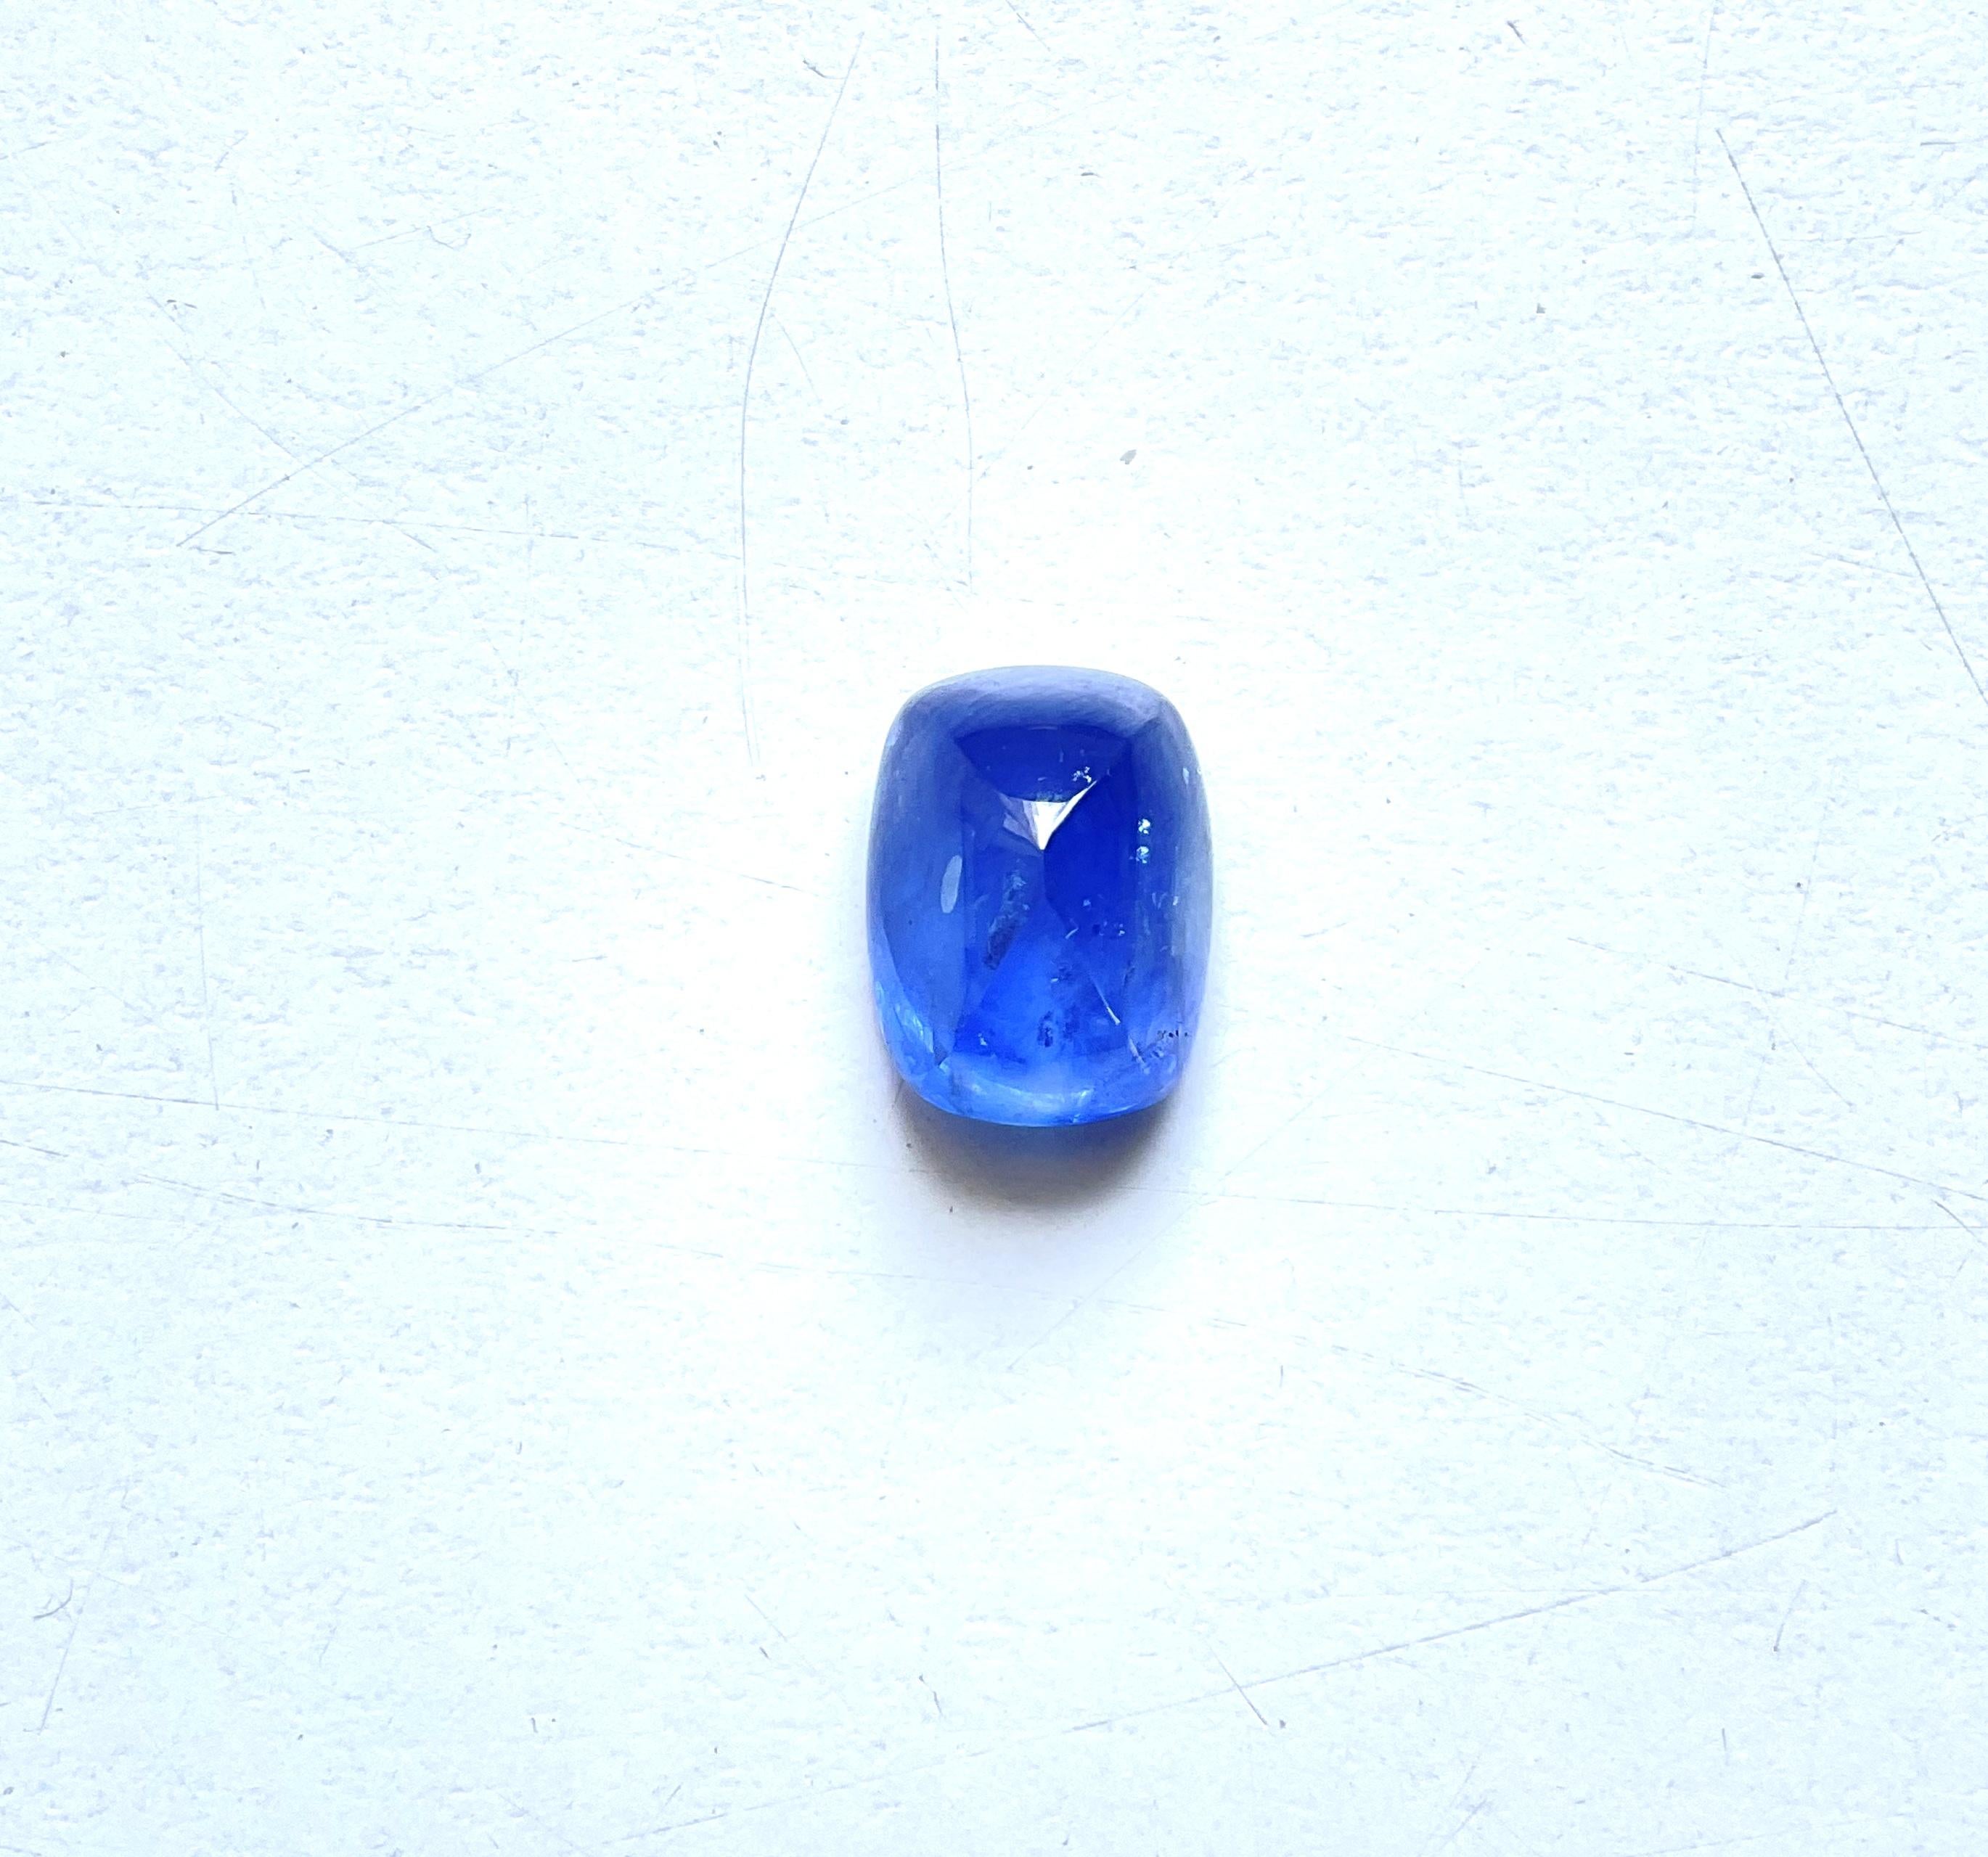 12.84 carats Blue Sapphire Sri Lanka ( Ceylon ) Sugarloaf Cabochon Natural gem

Gemstone: Blue Sapphire
Shape: Sugarloaf Cabochon
Carat weight: 12.84
Size - 13.87x10.5x8.7 MM